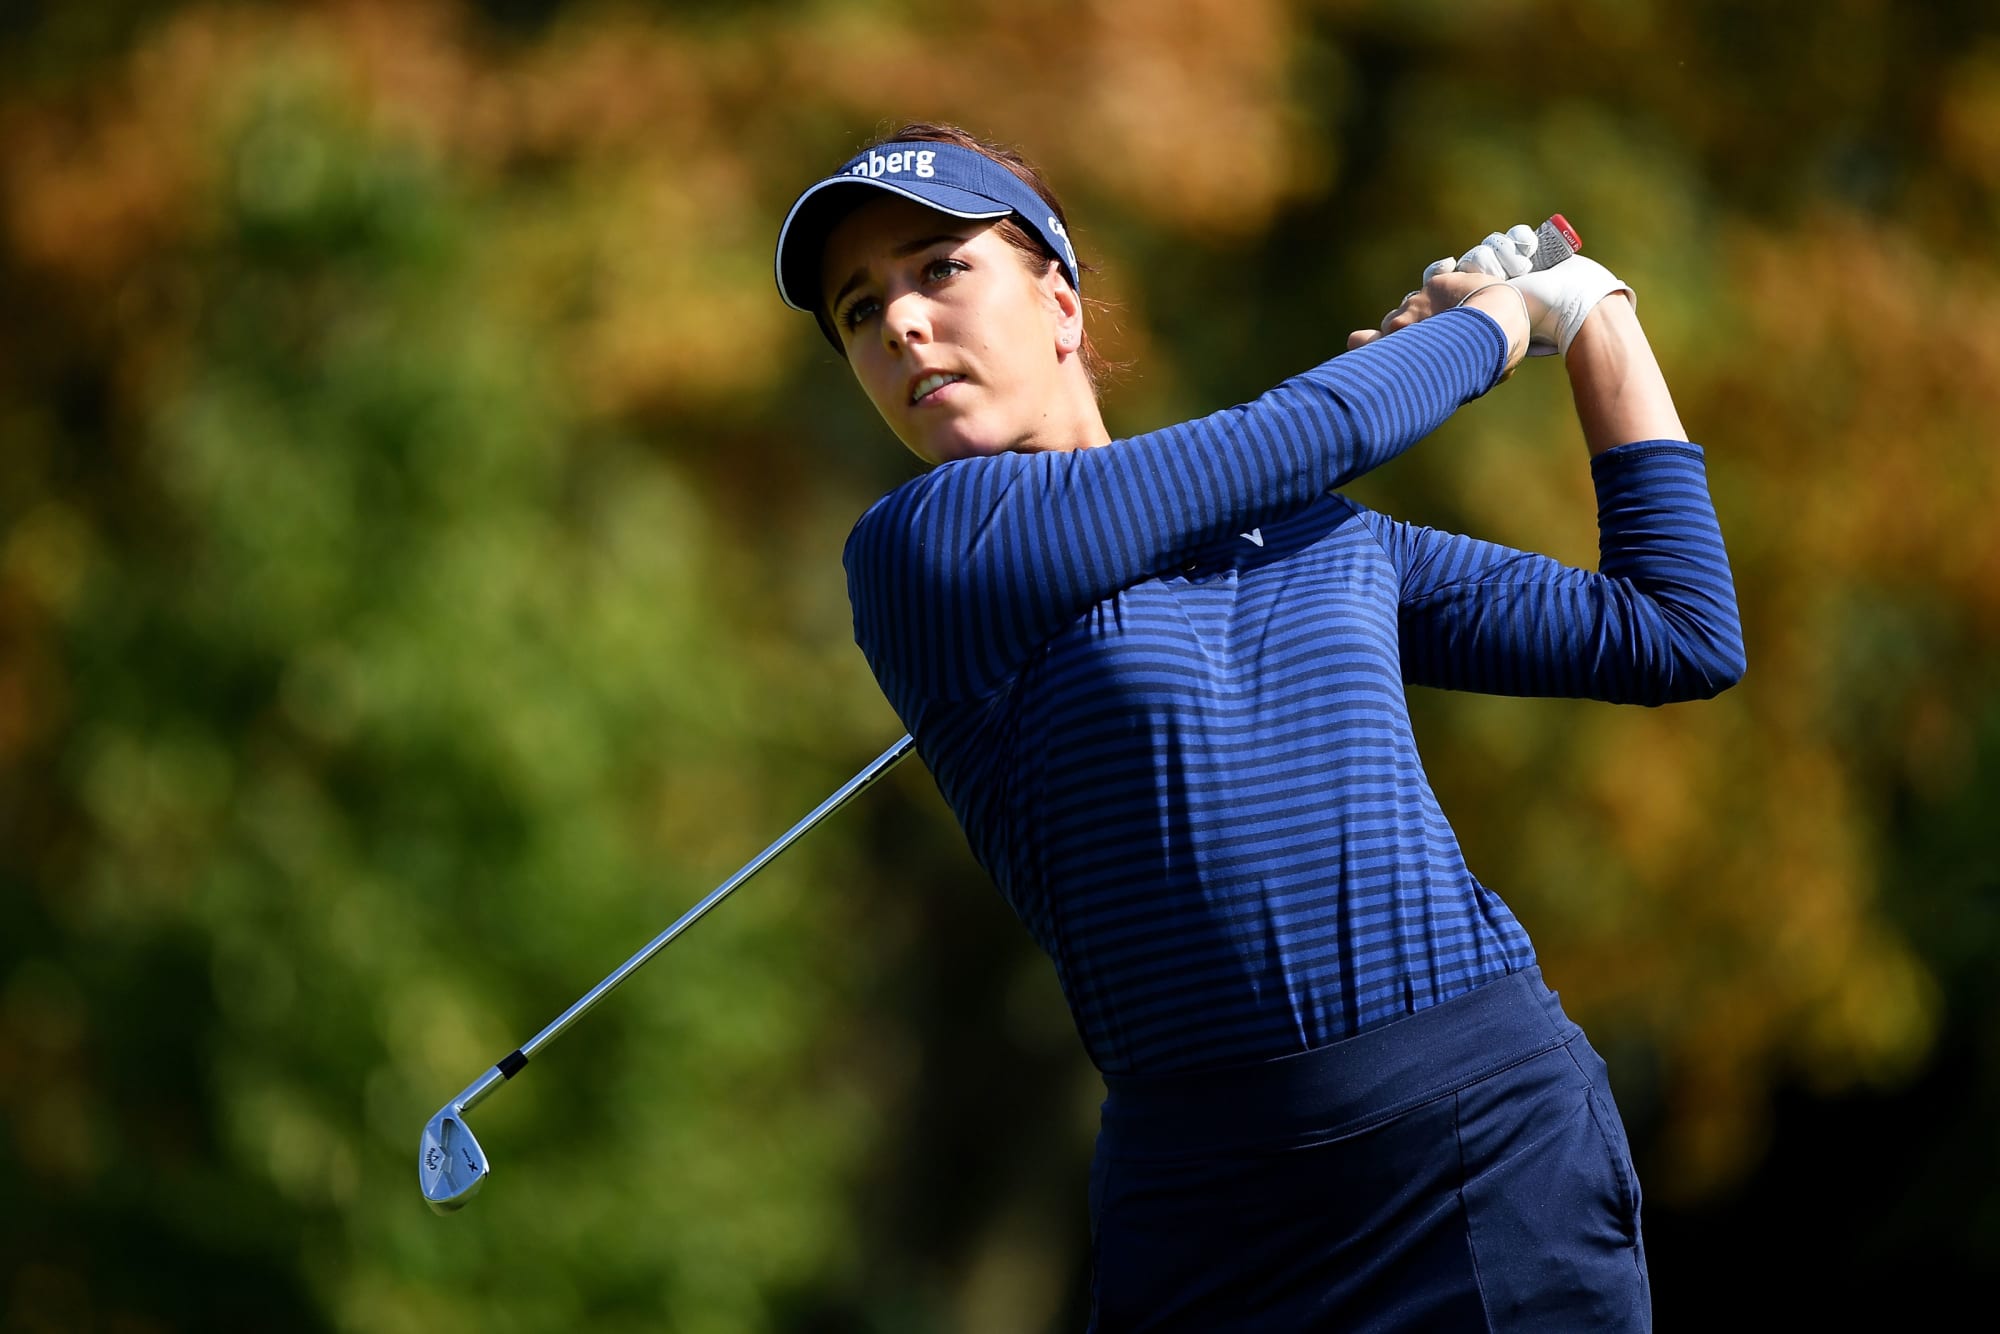 Georgia Hall continuing her rise to LPGA stardom at Evian Championship